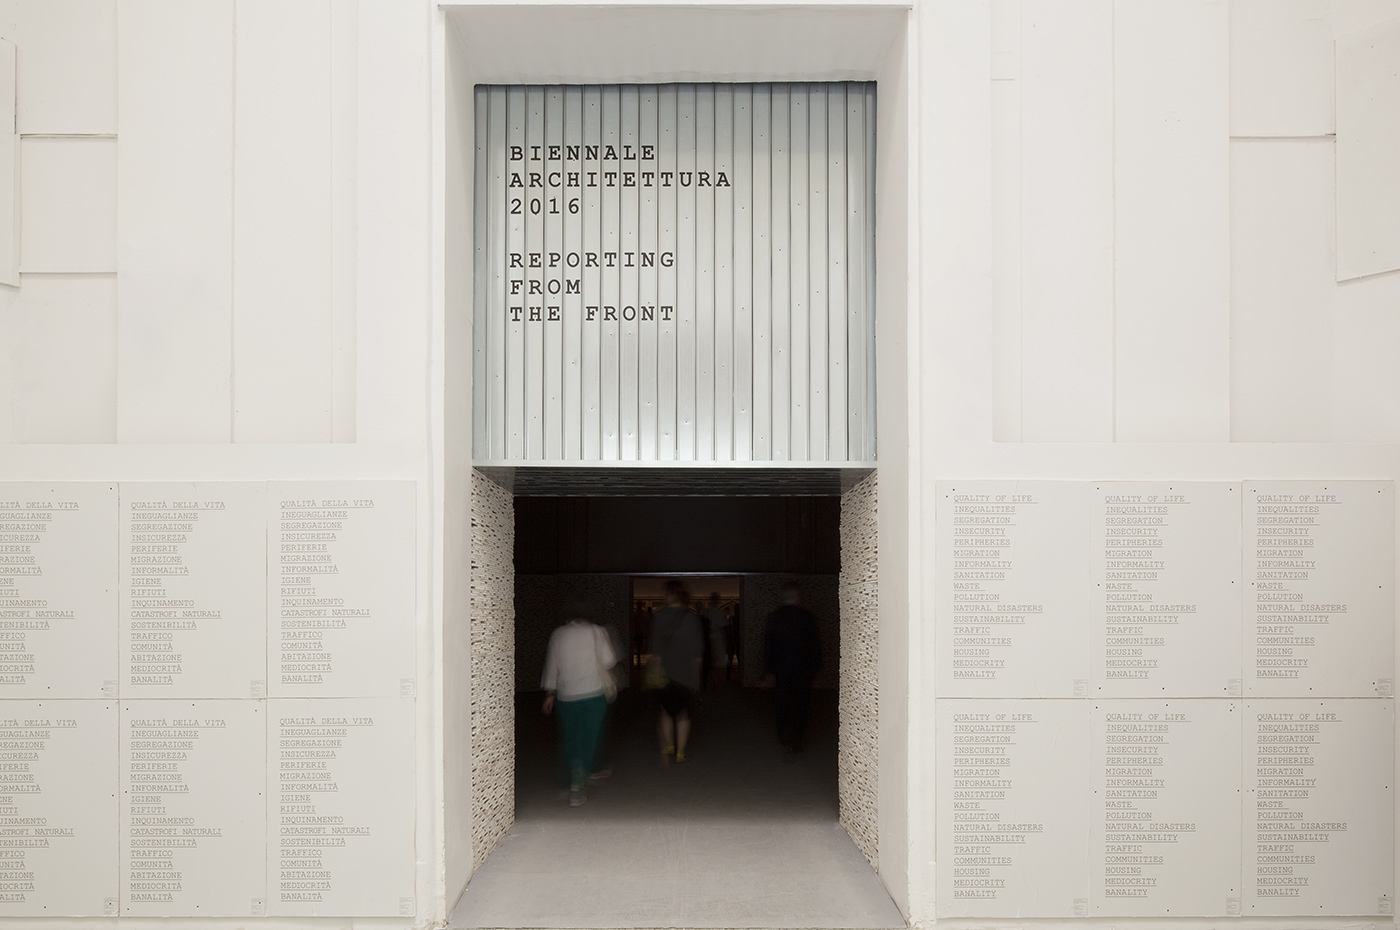 Italian Pavilion, Architecture Biennale, Venice, 2016